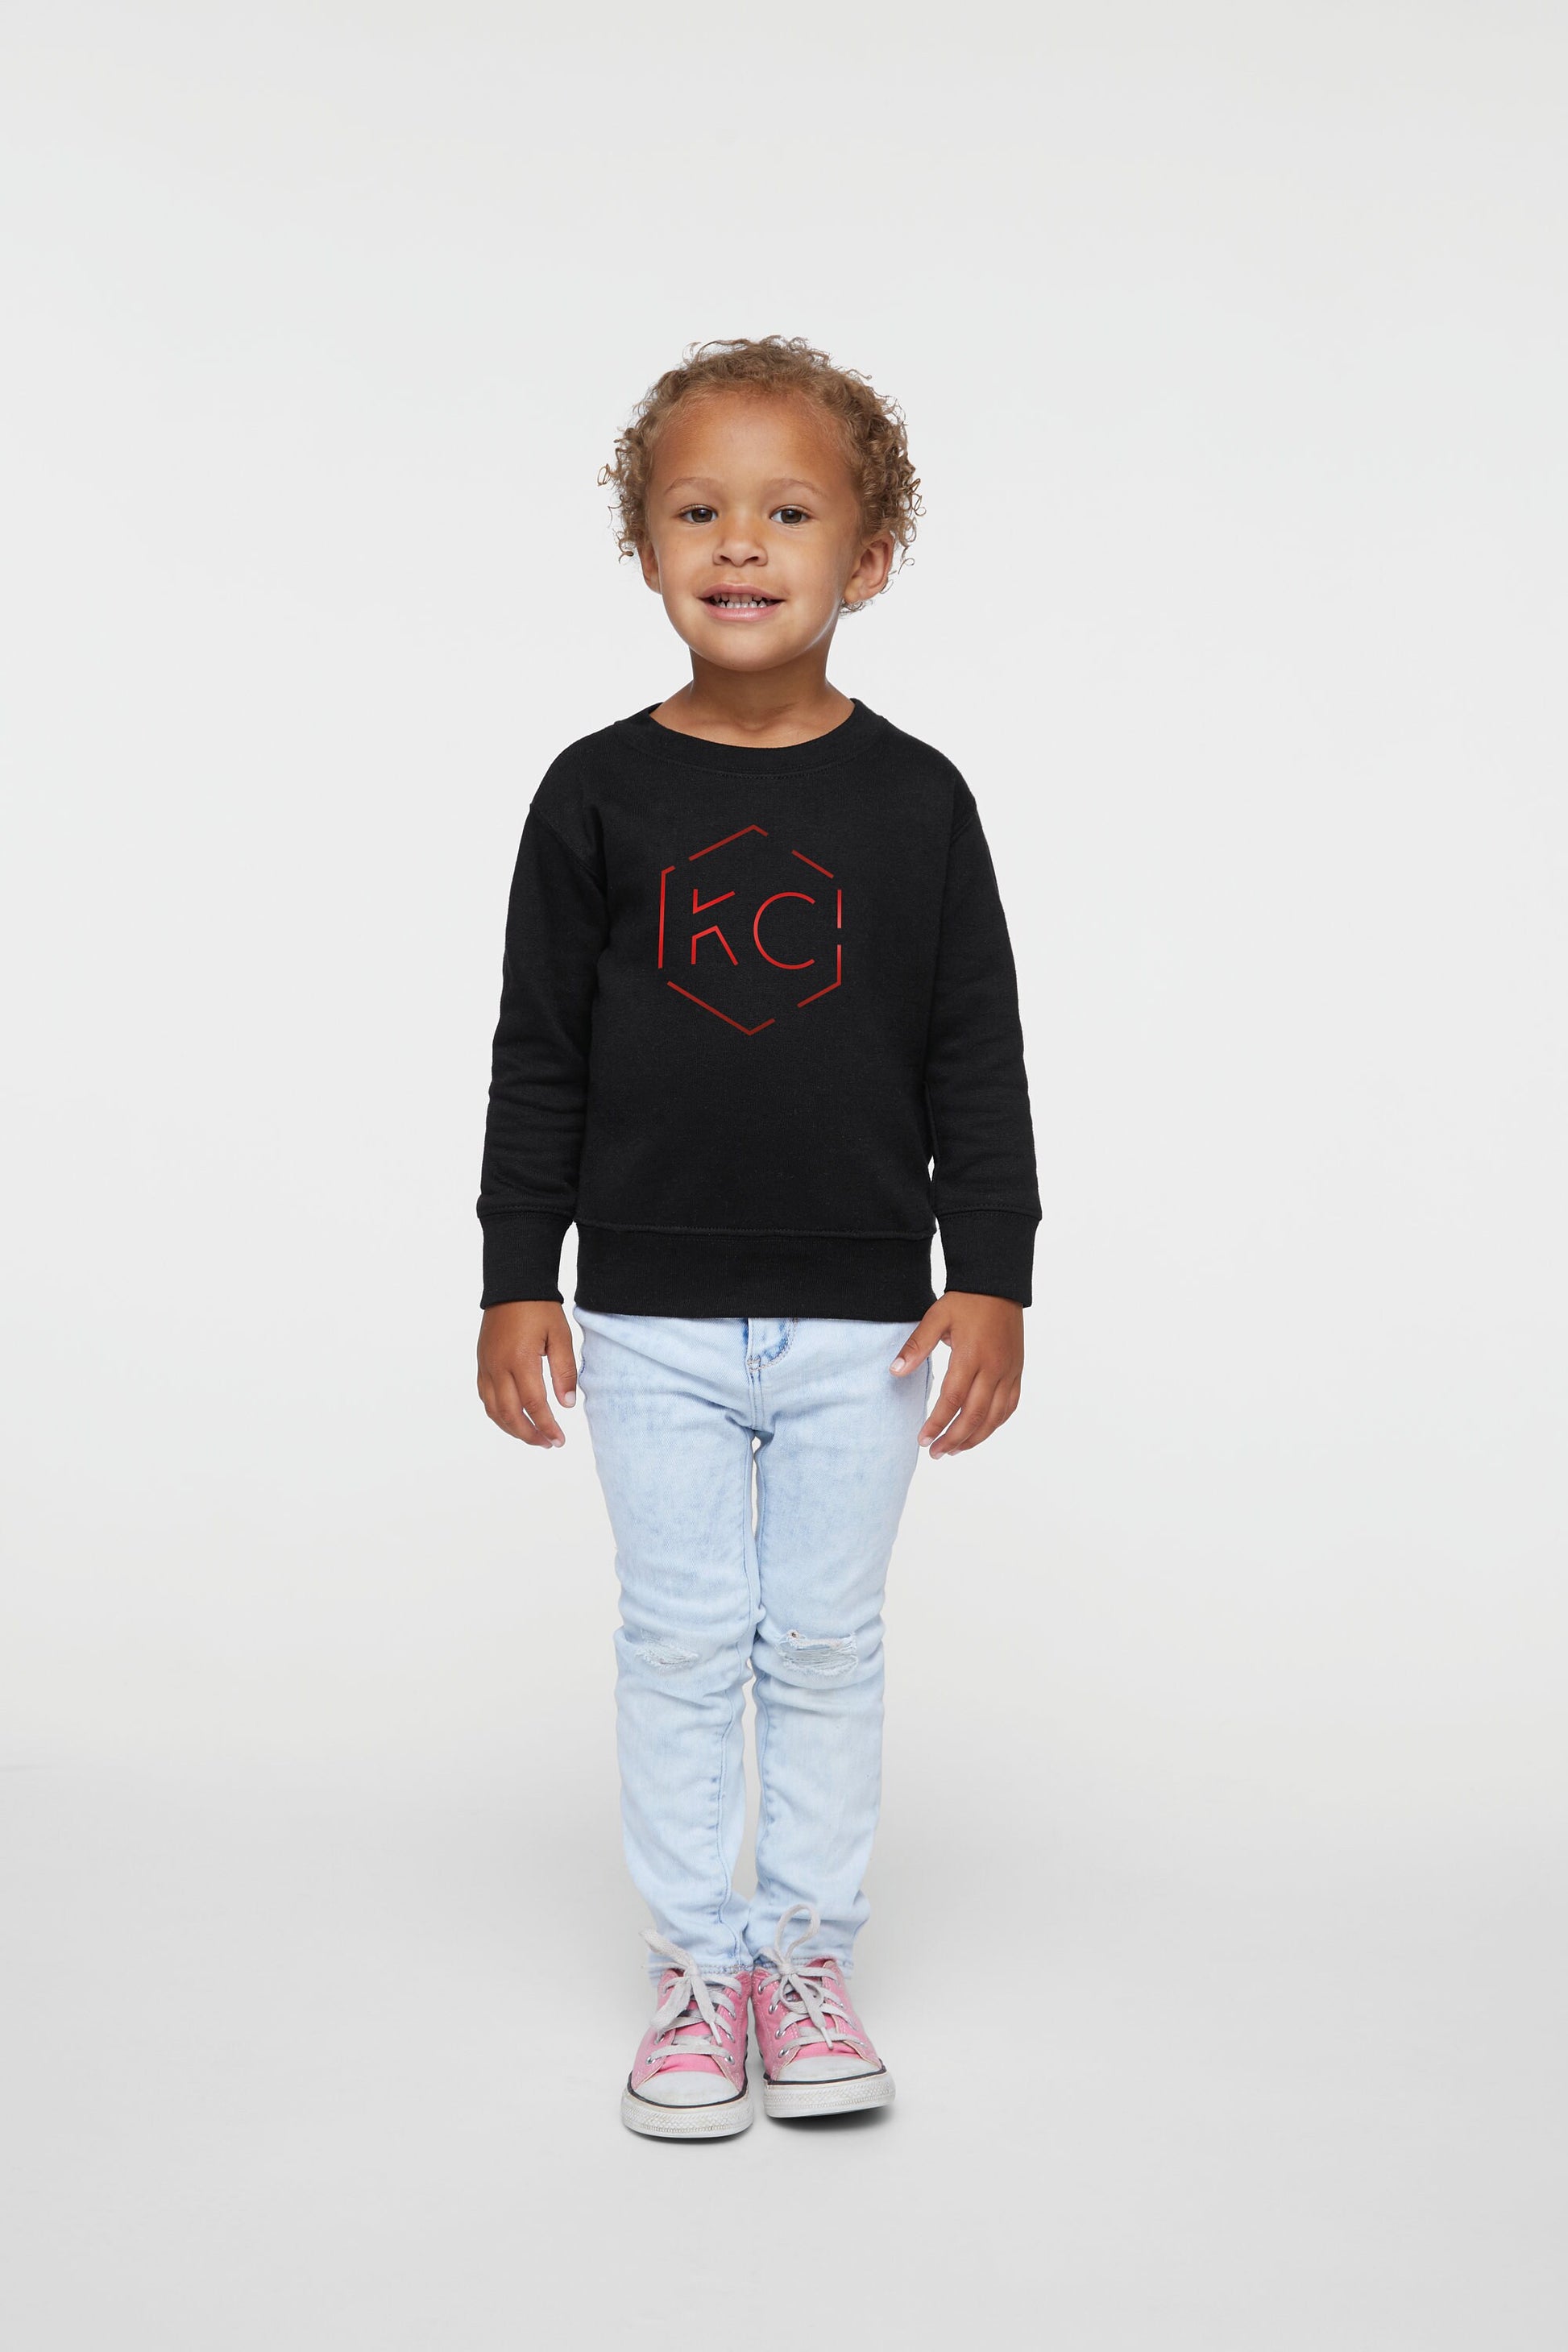 Toddler Infant KC Hexagon Black Sweatshirt Long & Short Sleeve T-Shirt | made here in Kansas City! | Perfect for Game Day! Soft | Modern